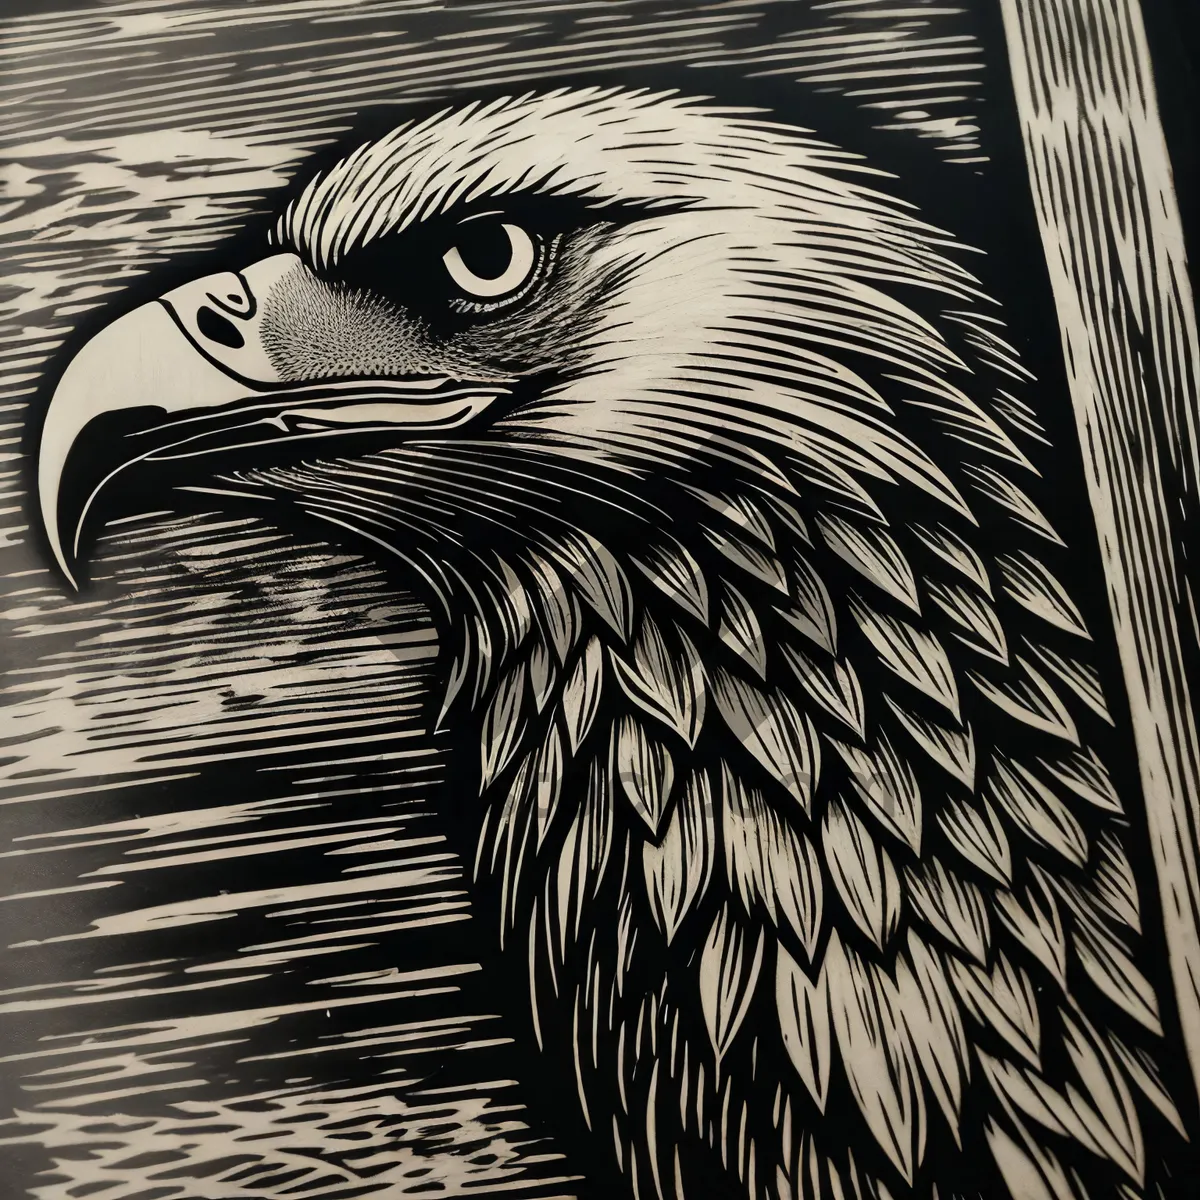 Picture of Majestic eagle showcasing fierce predator gaze